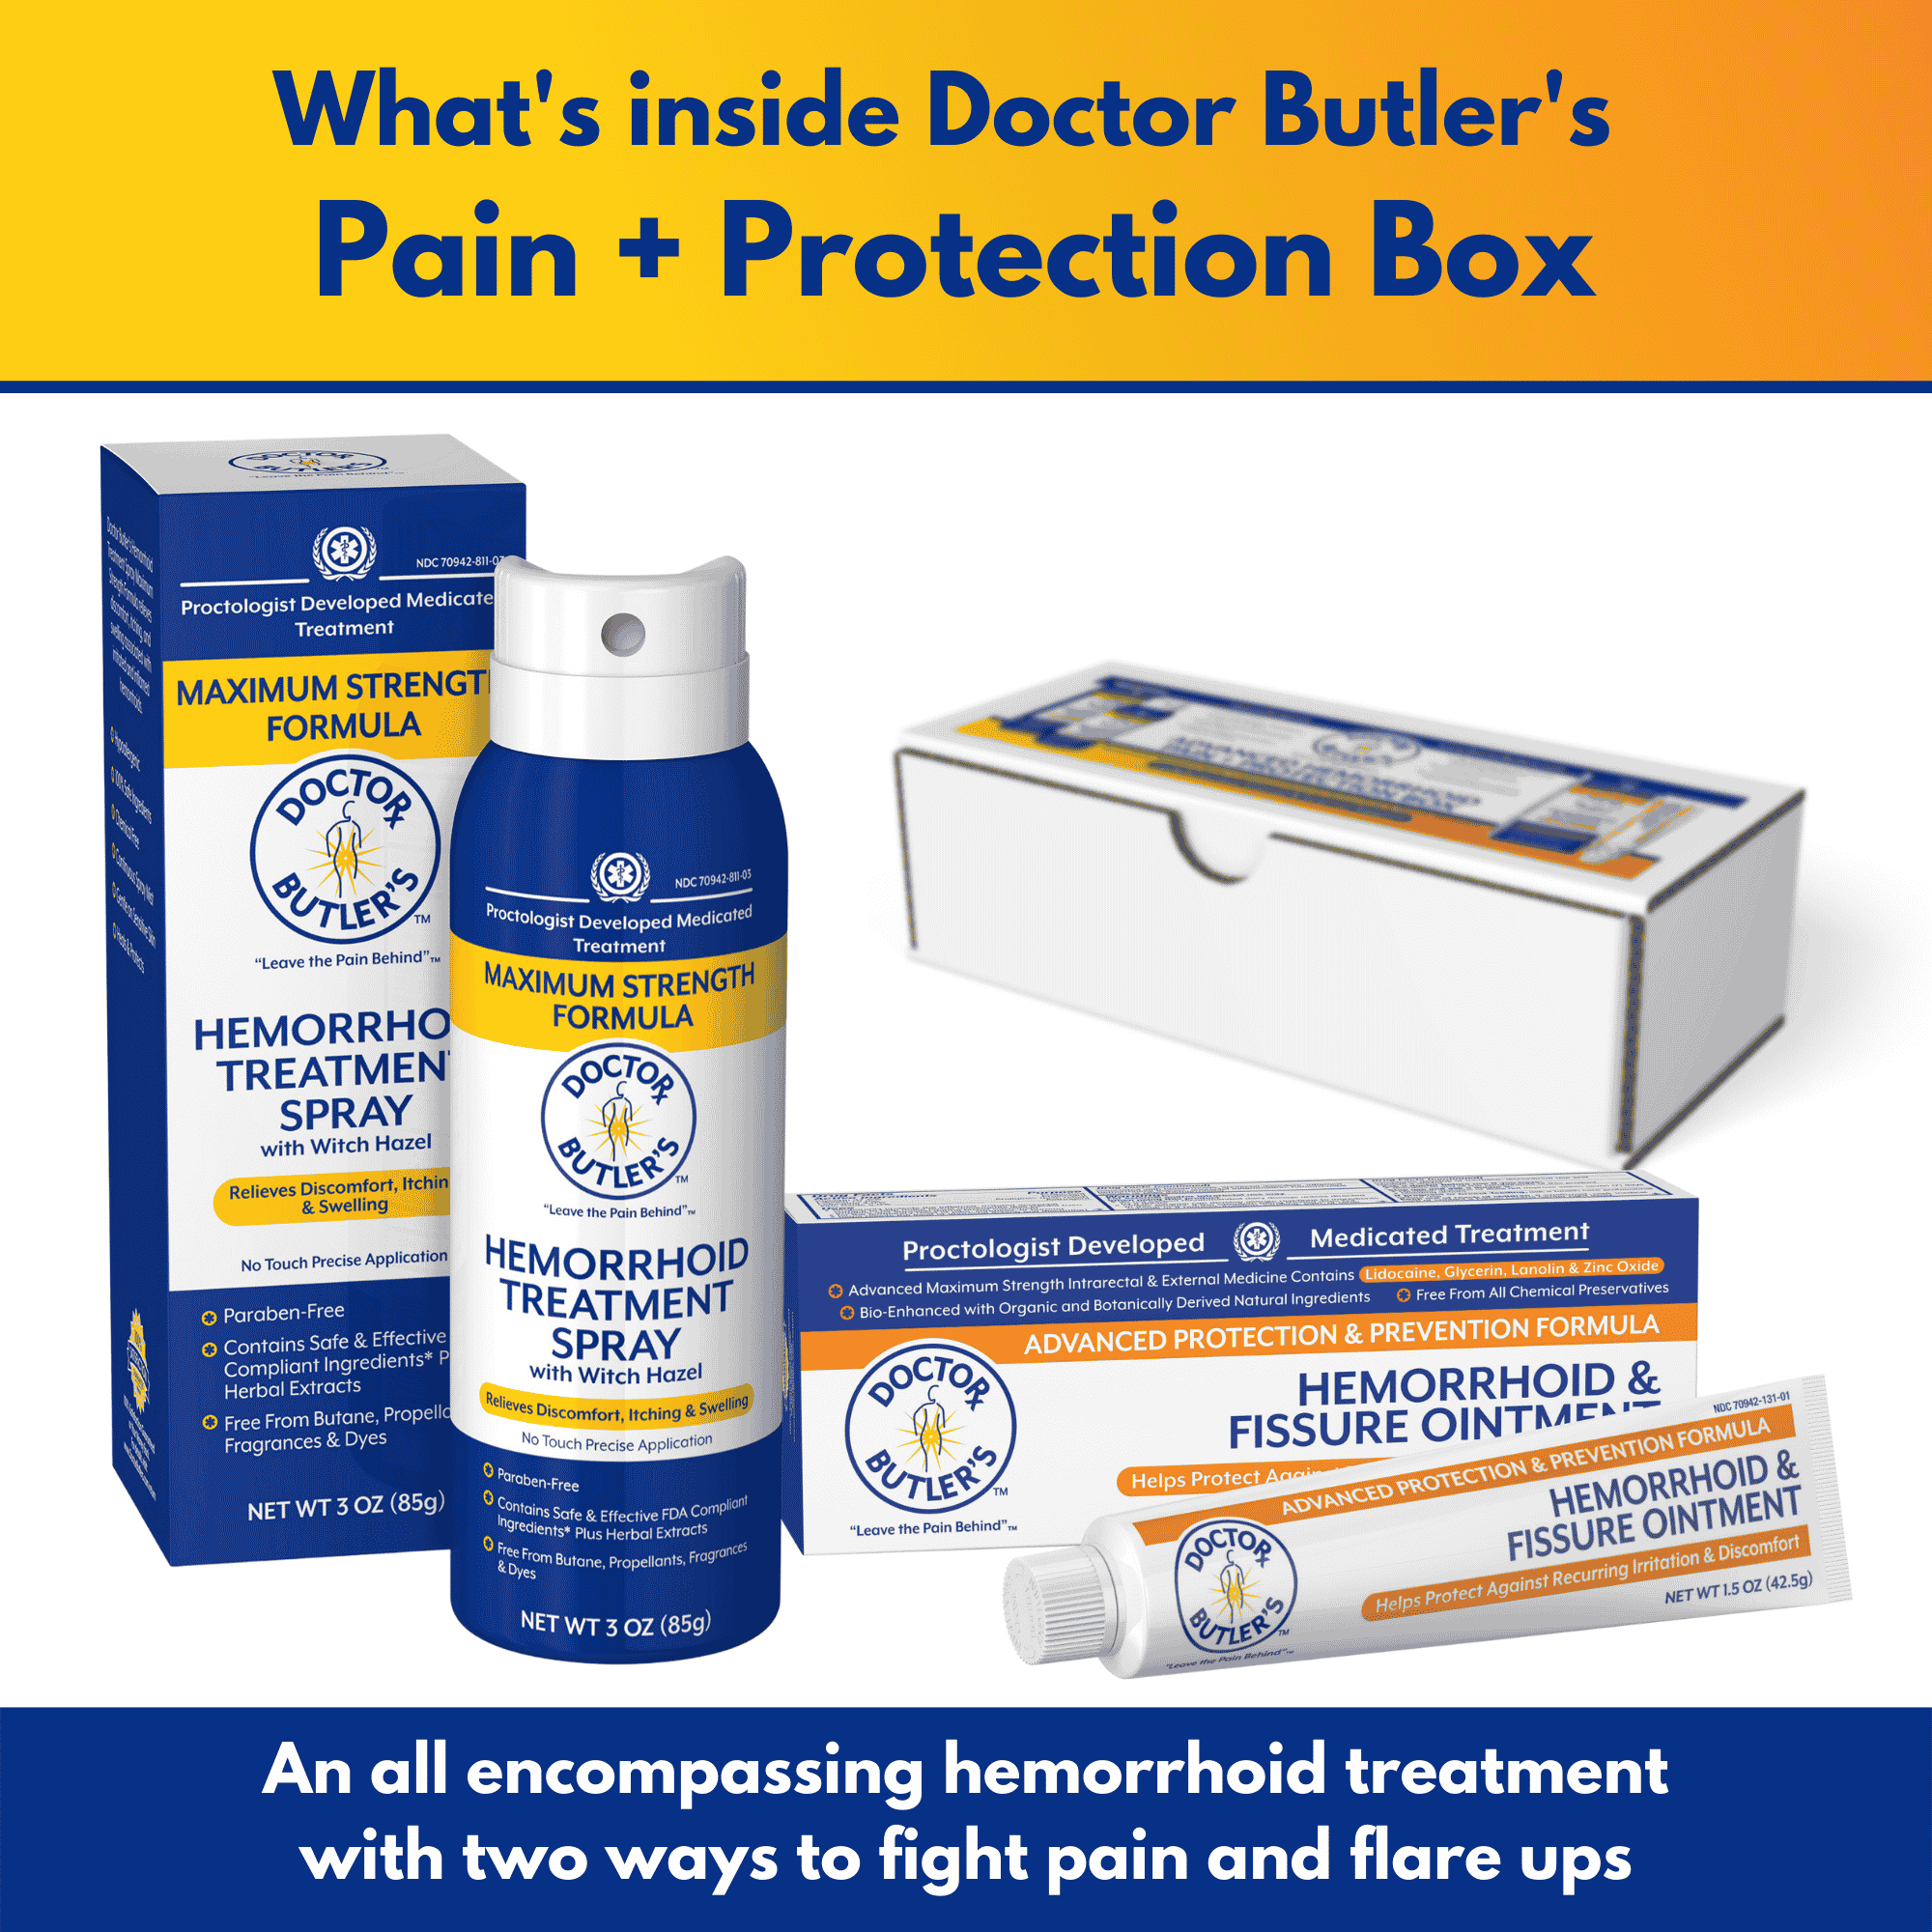 Advanced Hemorrhoid Pain & Protection Box